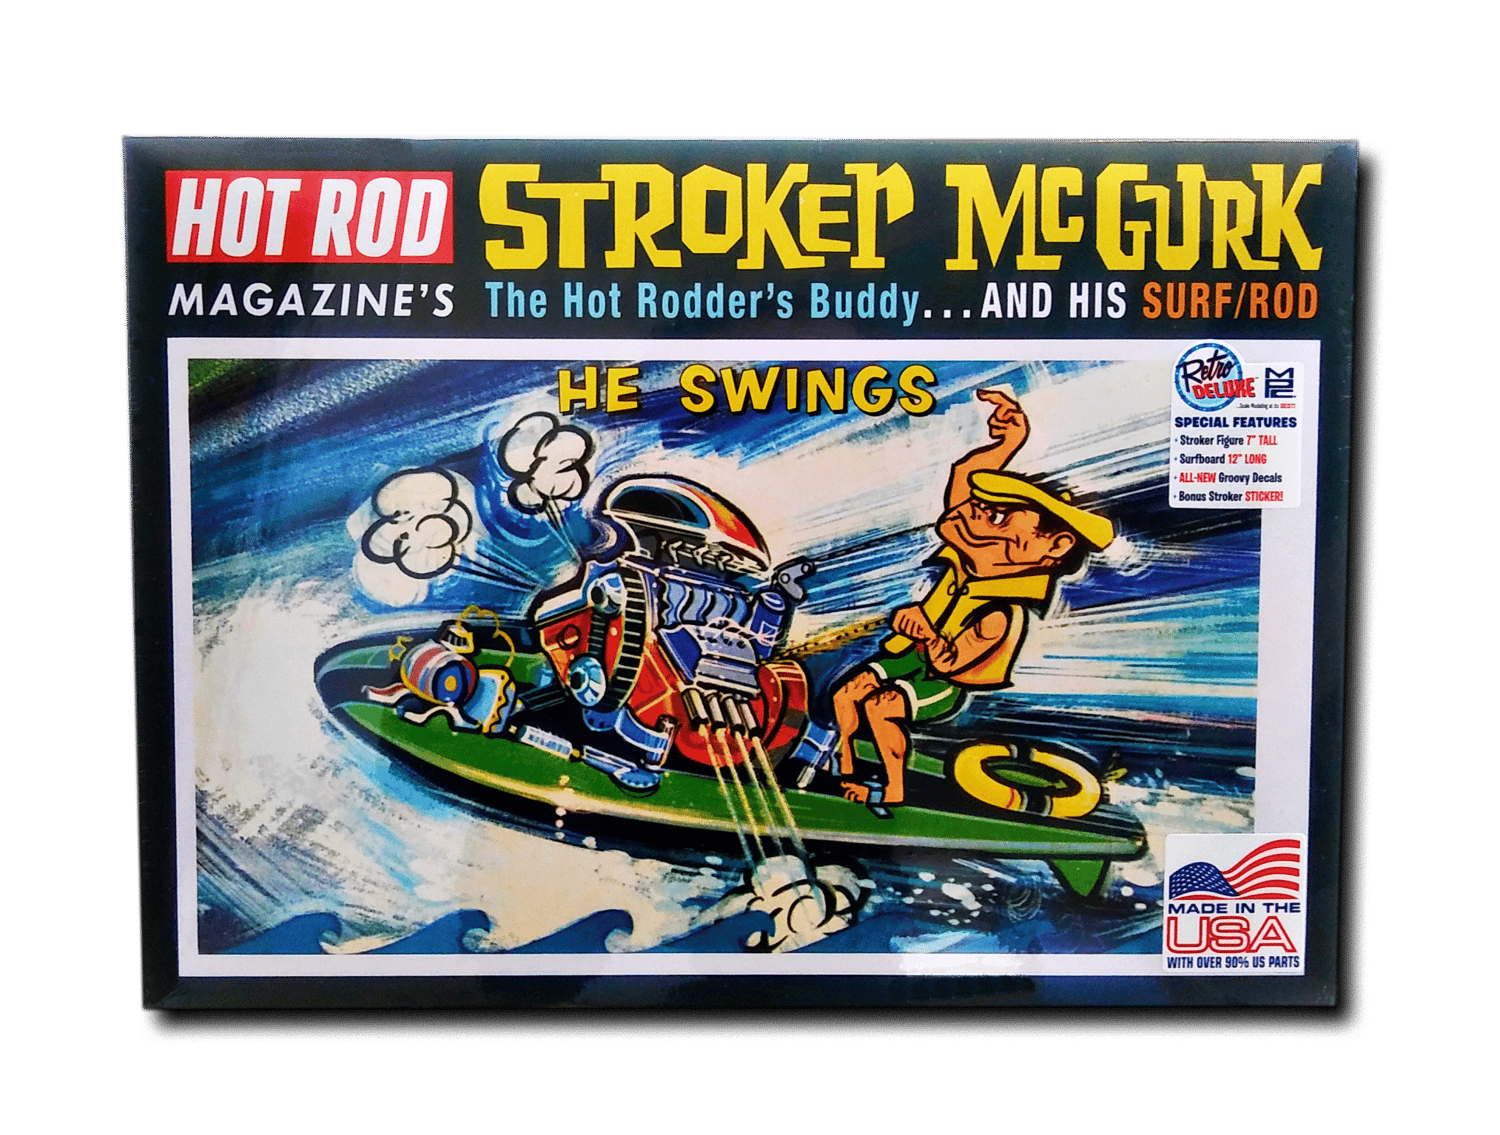 The Stroker McGurk "Surf Rod" Model Kit